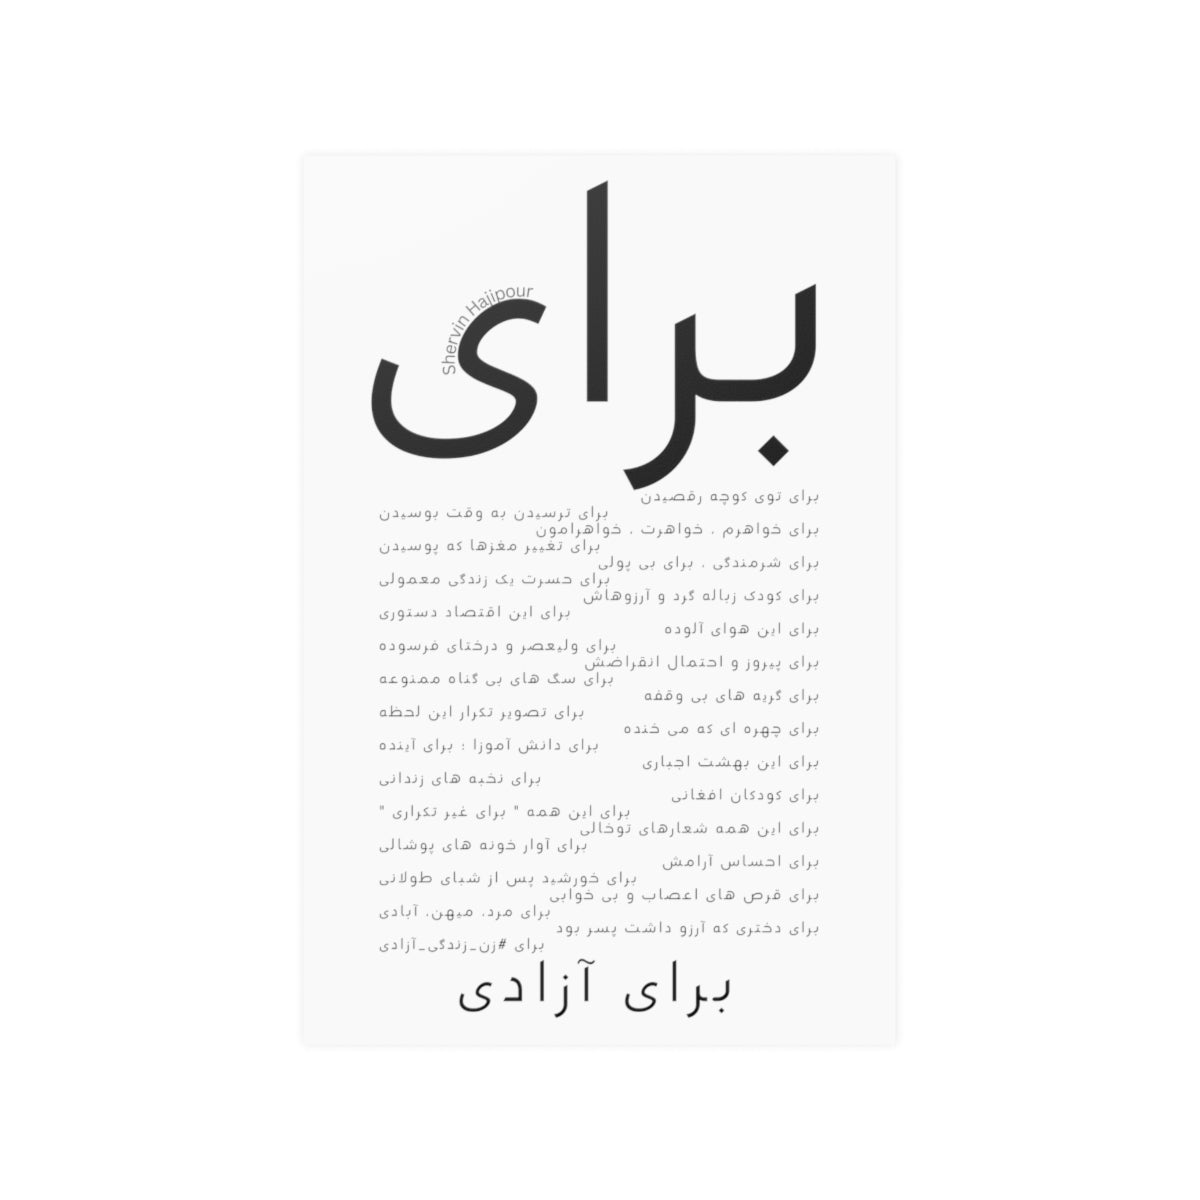 Baraye Shervin Hajipour Lyric Poster, Zan Zendegi Azadi, Mahsa Amini #baraye #mahsaamini iranfreedom iranrevolution freeiran